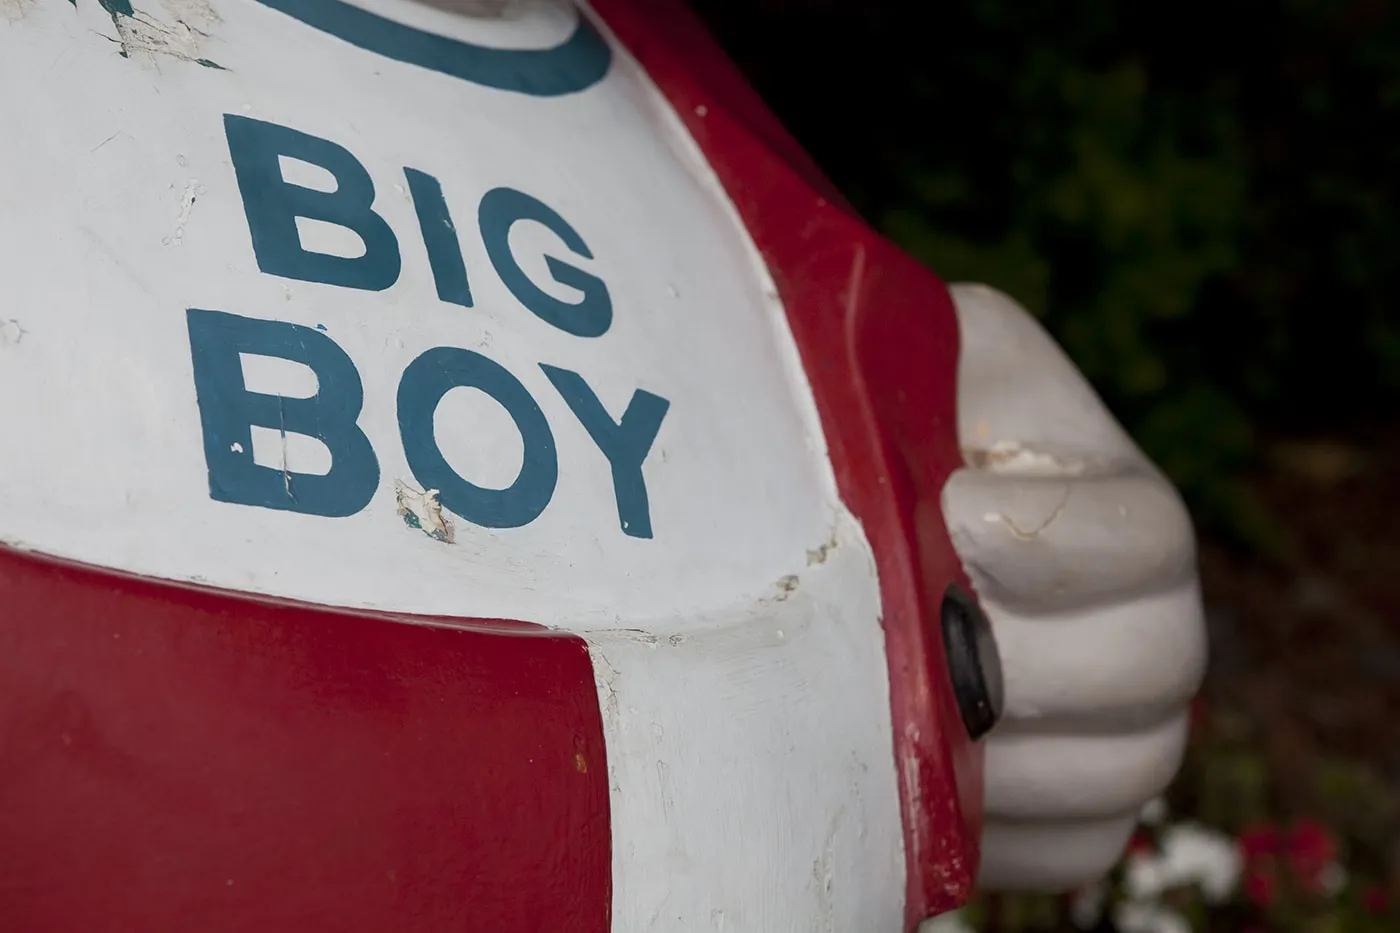 Big Boy Statue - I-94 Exit 159 in Michigan